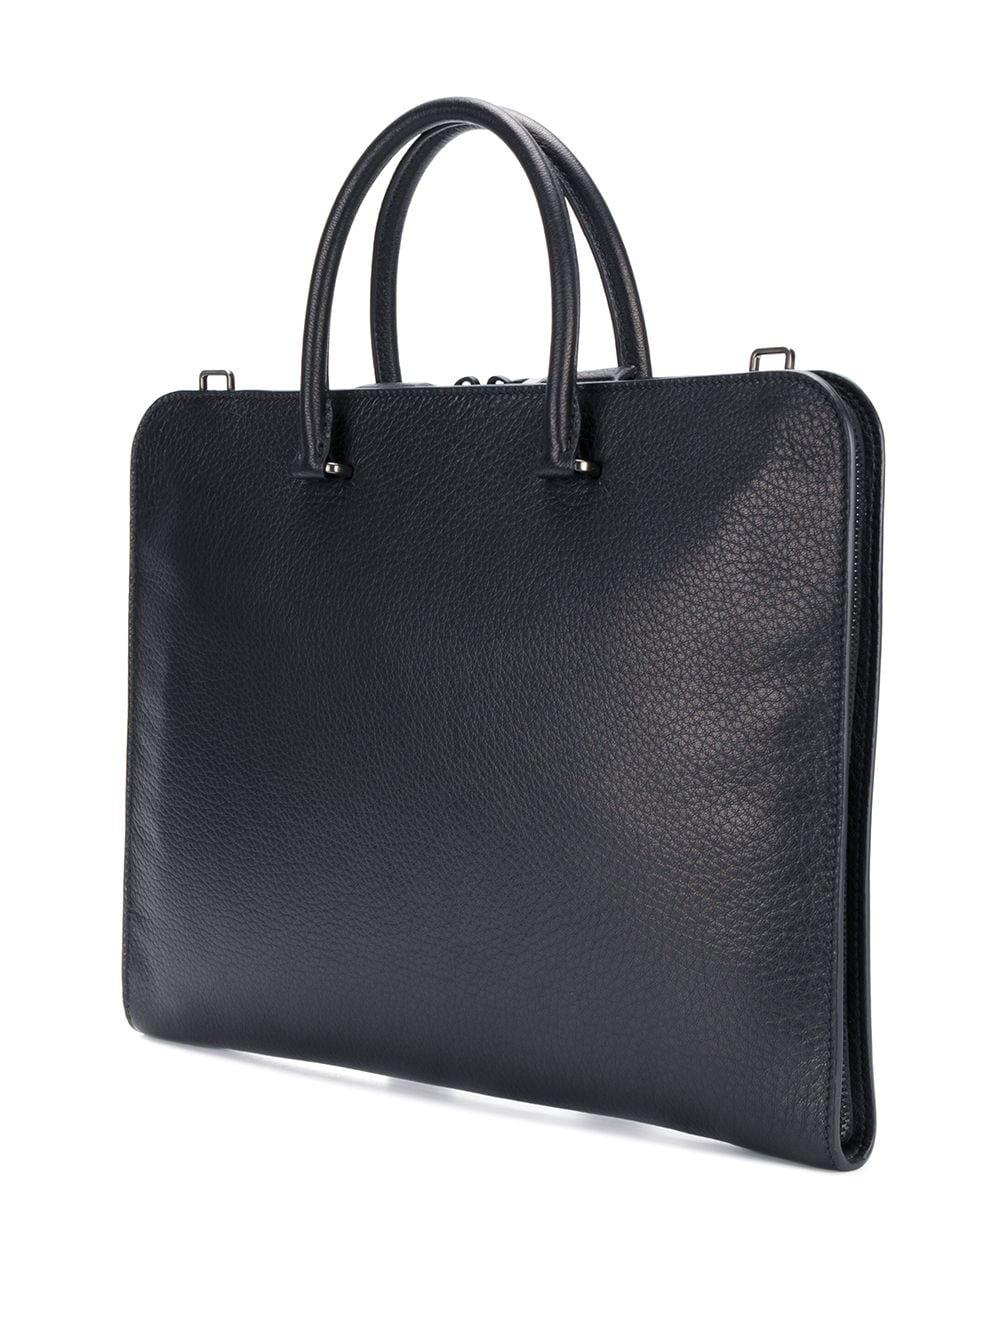 Prada Leather Top Handle Laptop Bag in Black for Men - Lyst